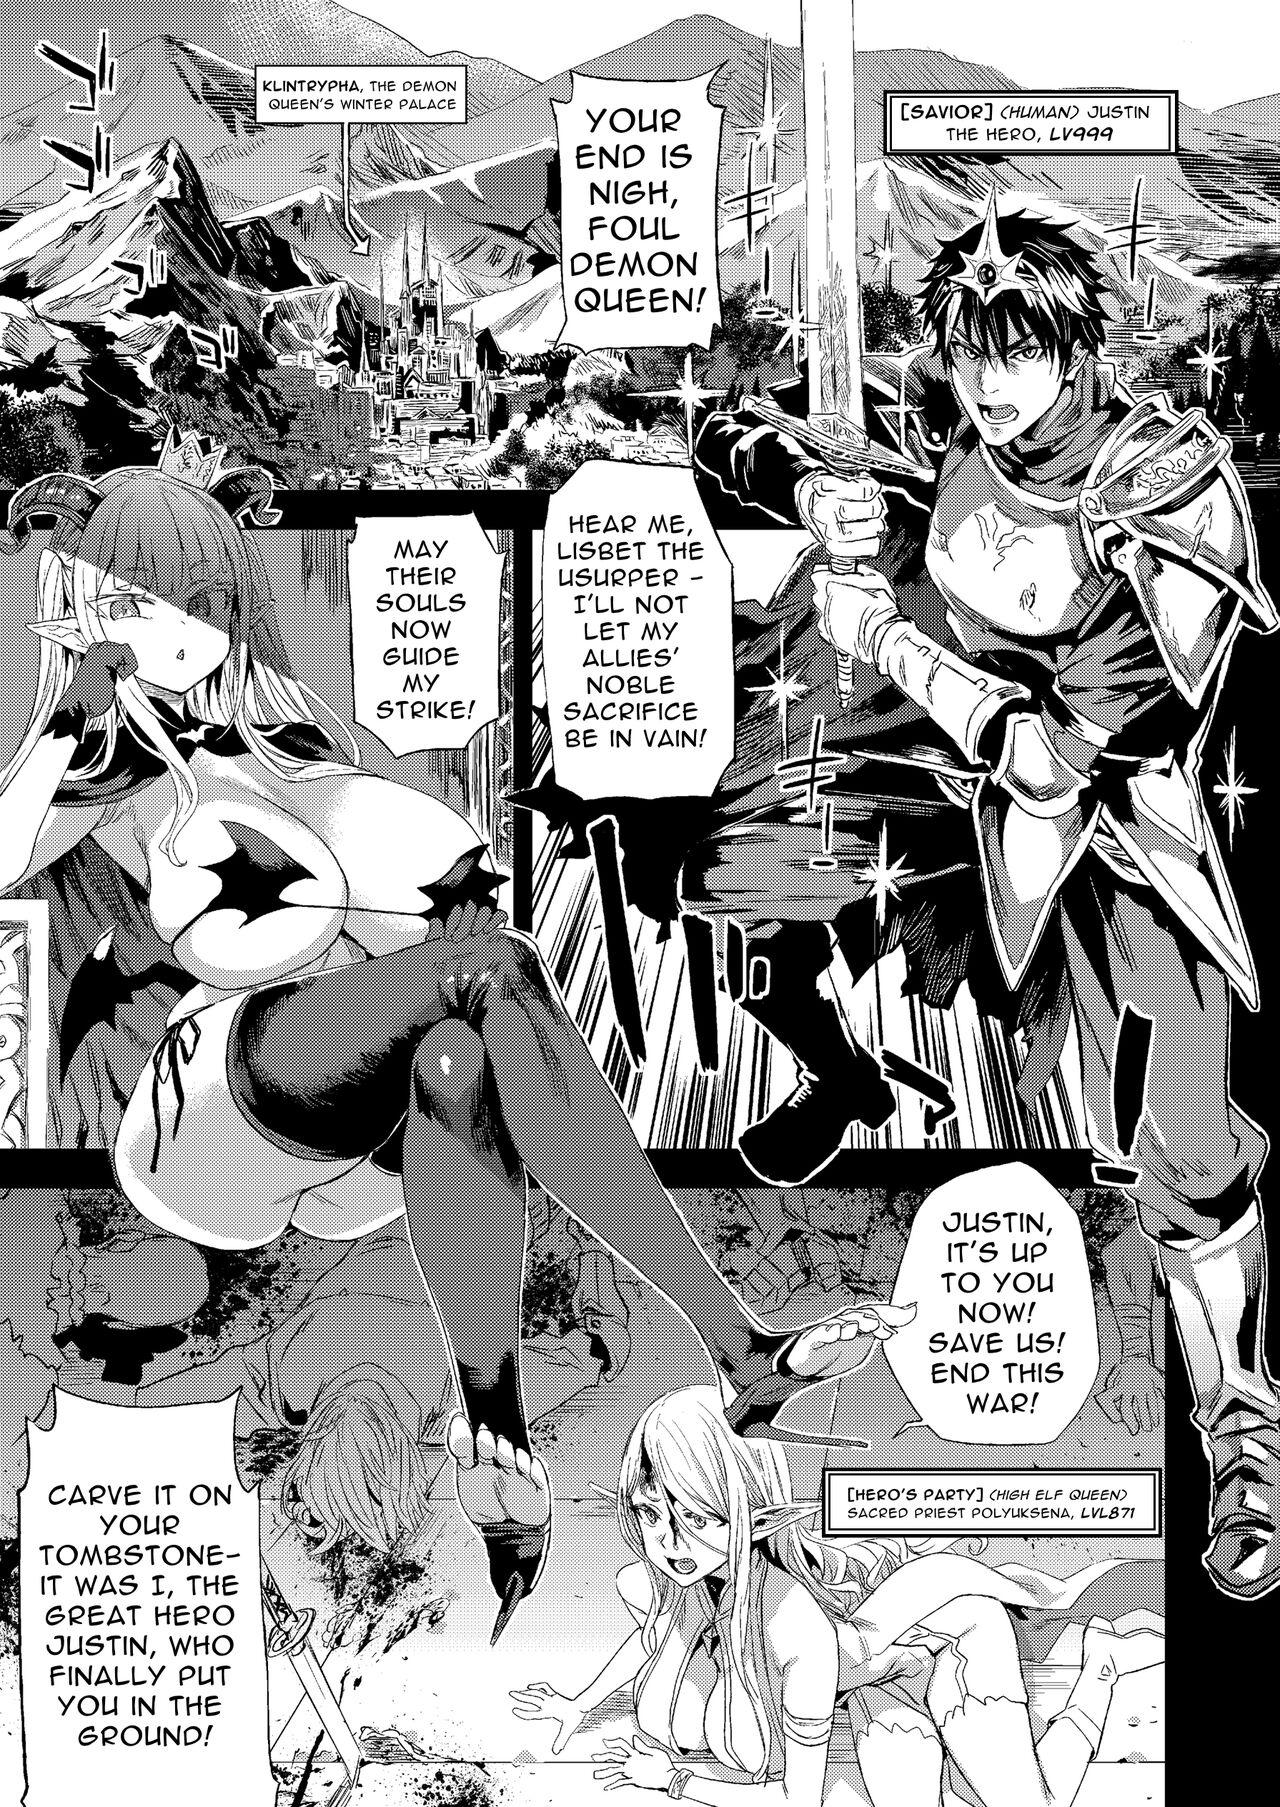 Tribute Succubus Queen vs Goblin Grunts - Original Macho - Page 3